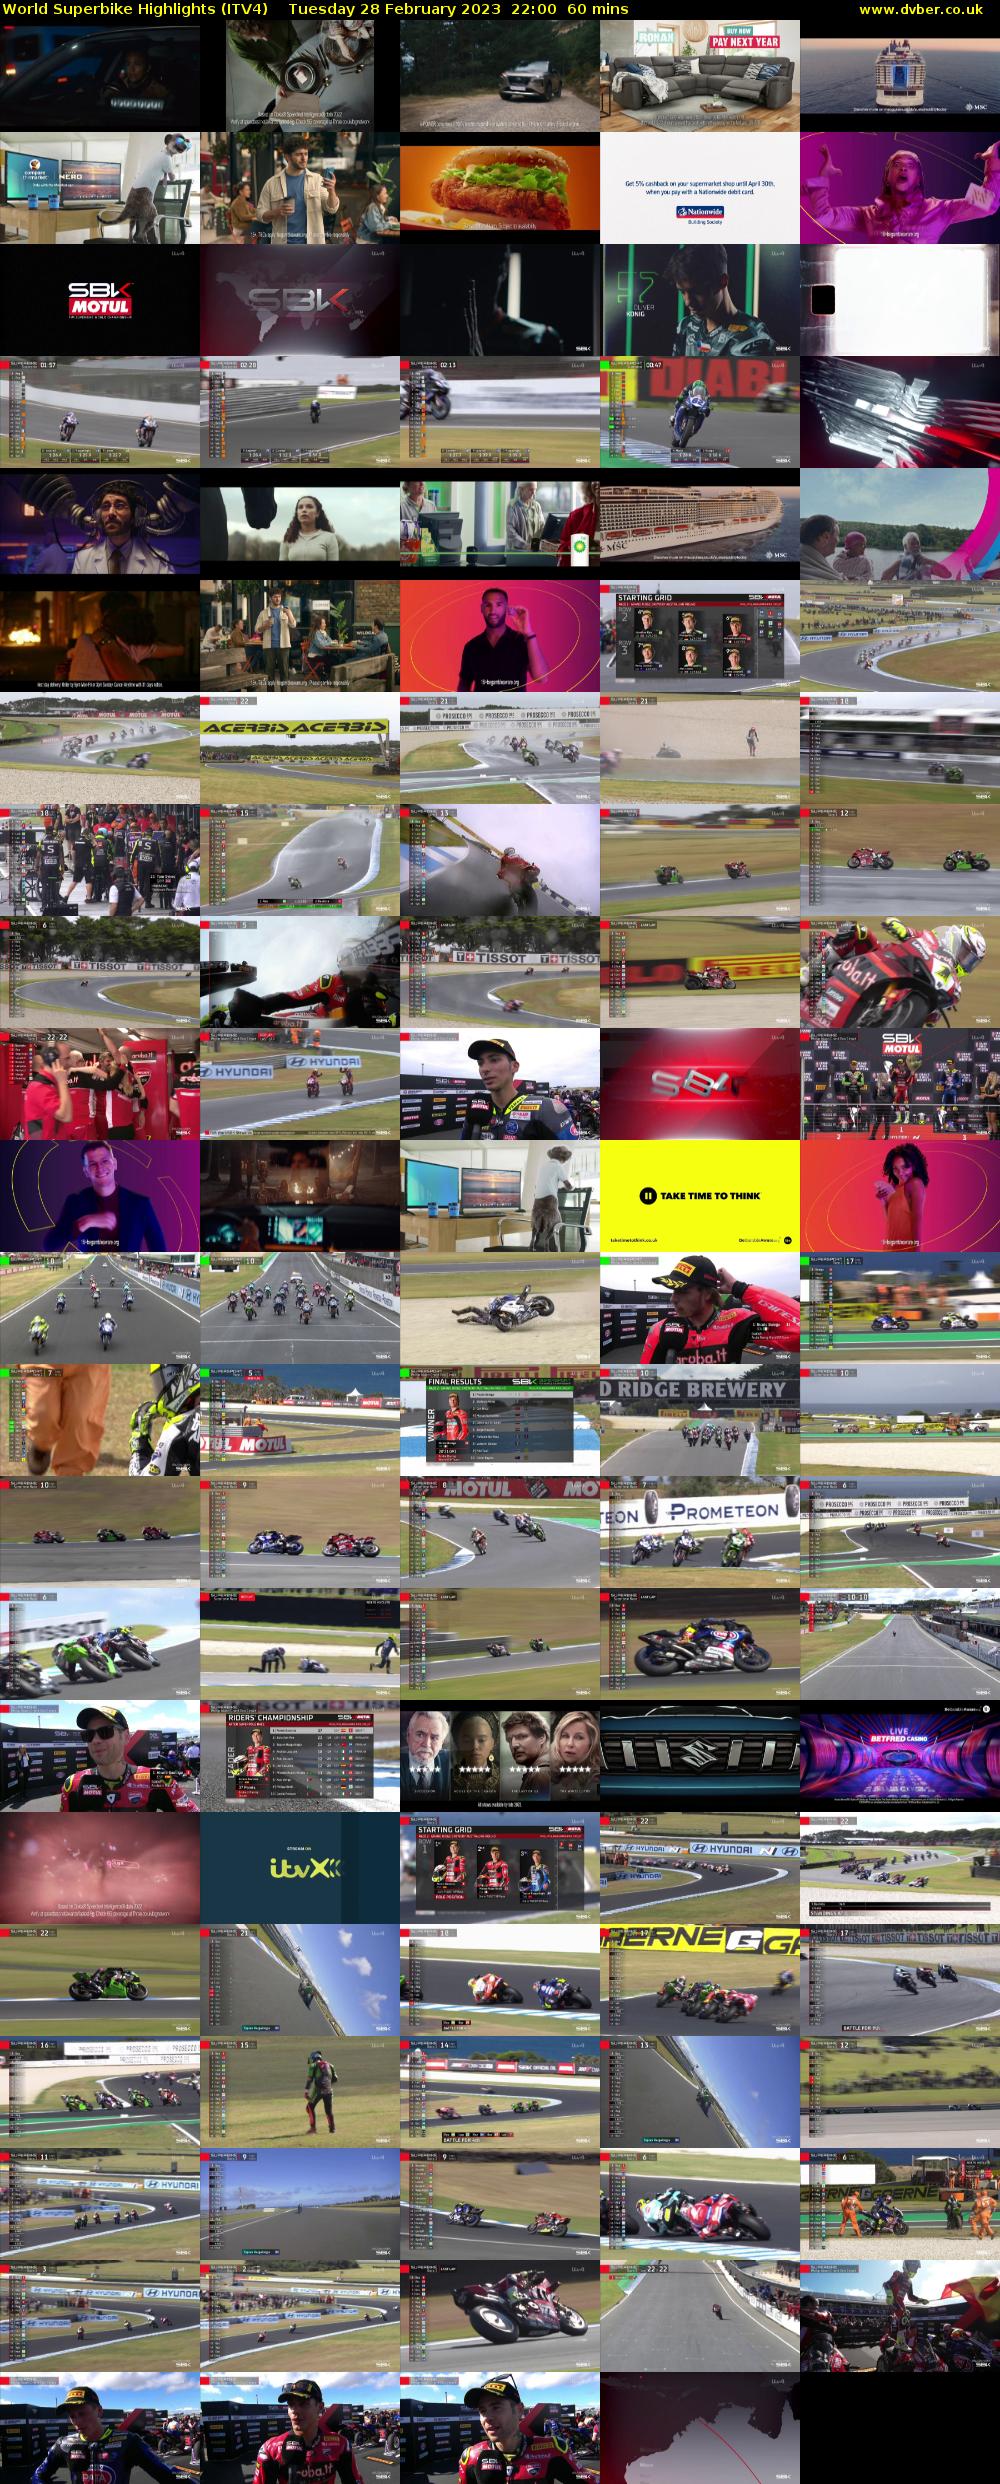 World Superbike Highlights (ITV4) Tuesday 28 February 2023 22:00 - 23:00